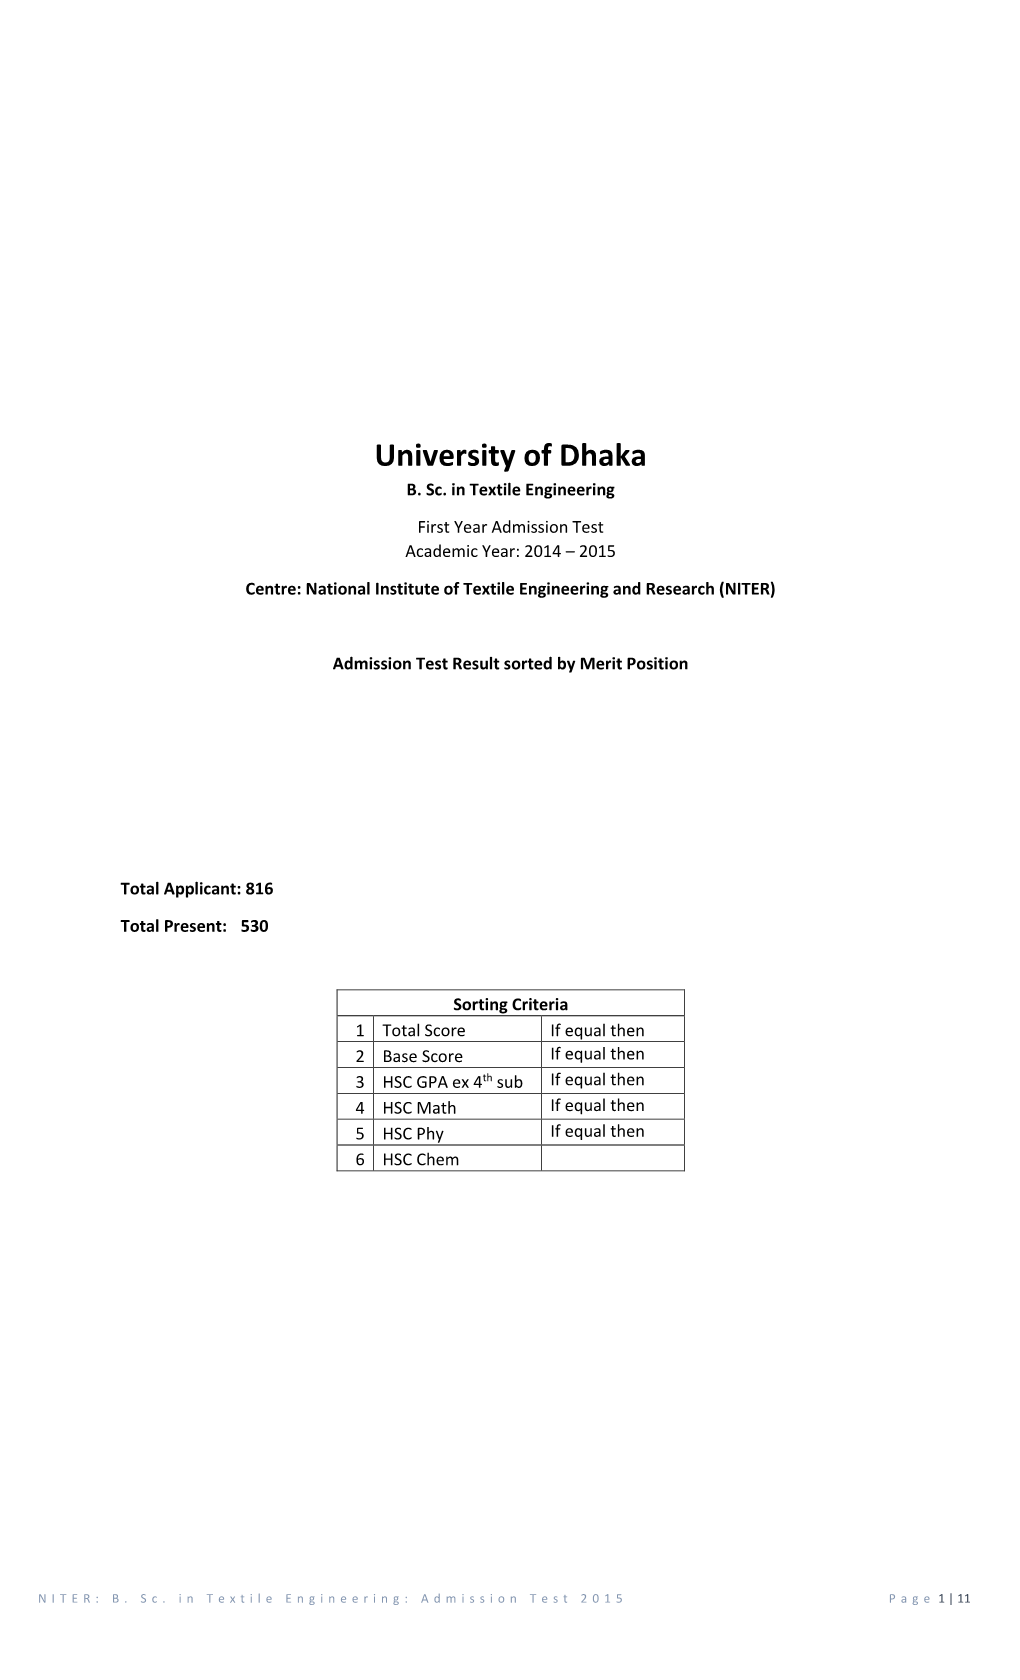 University of Dhaka B